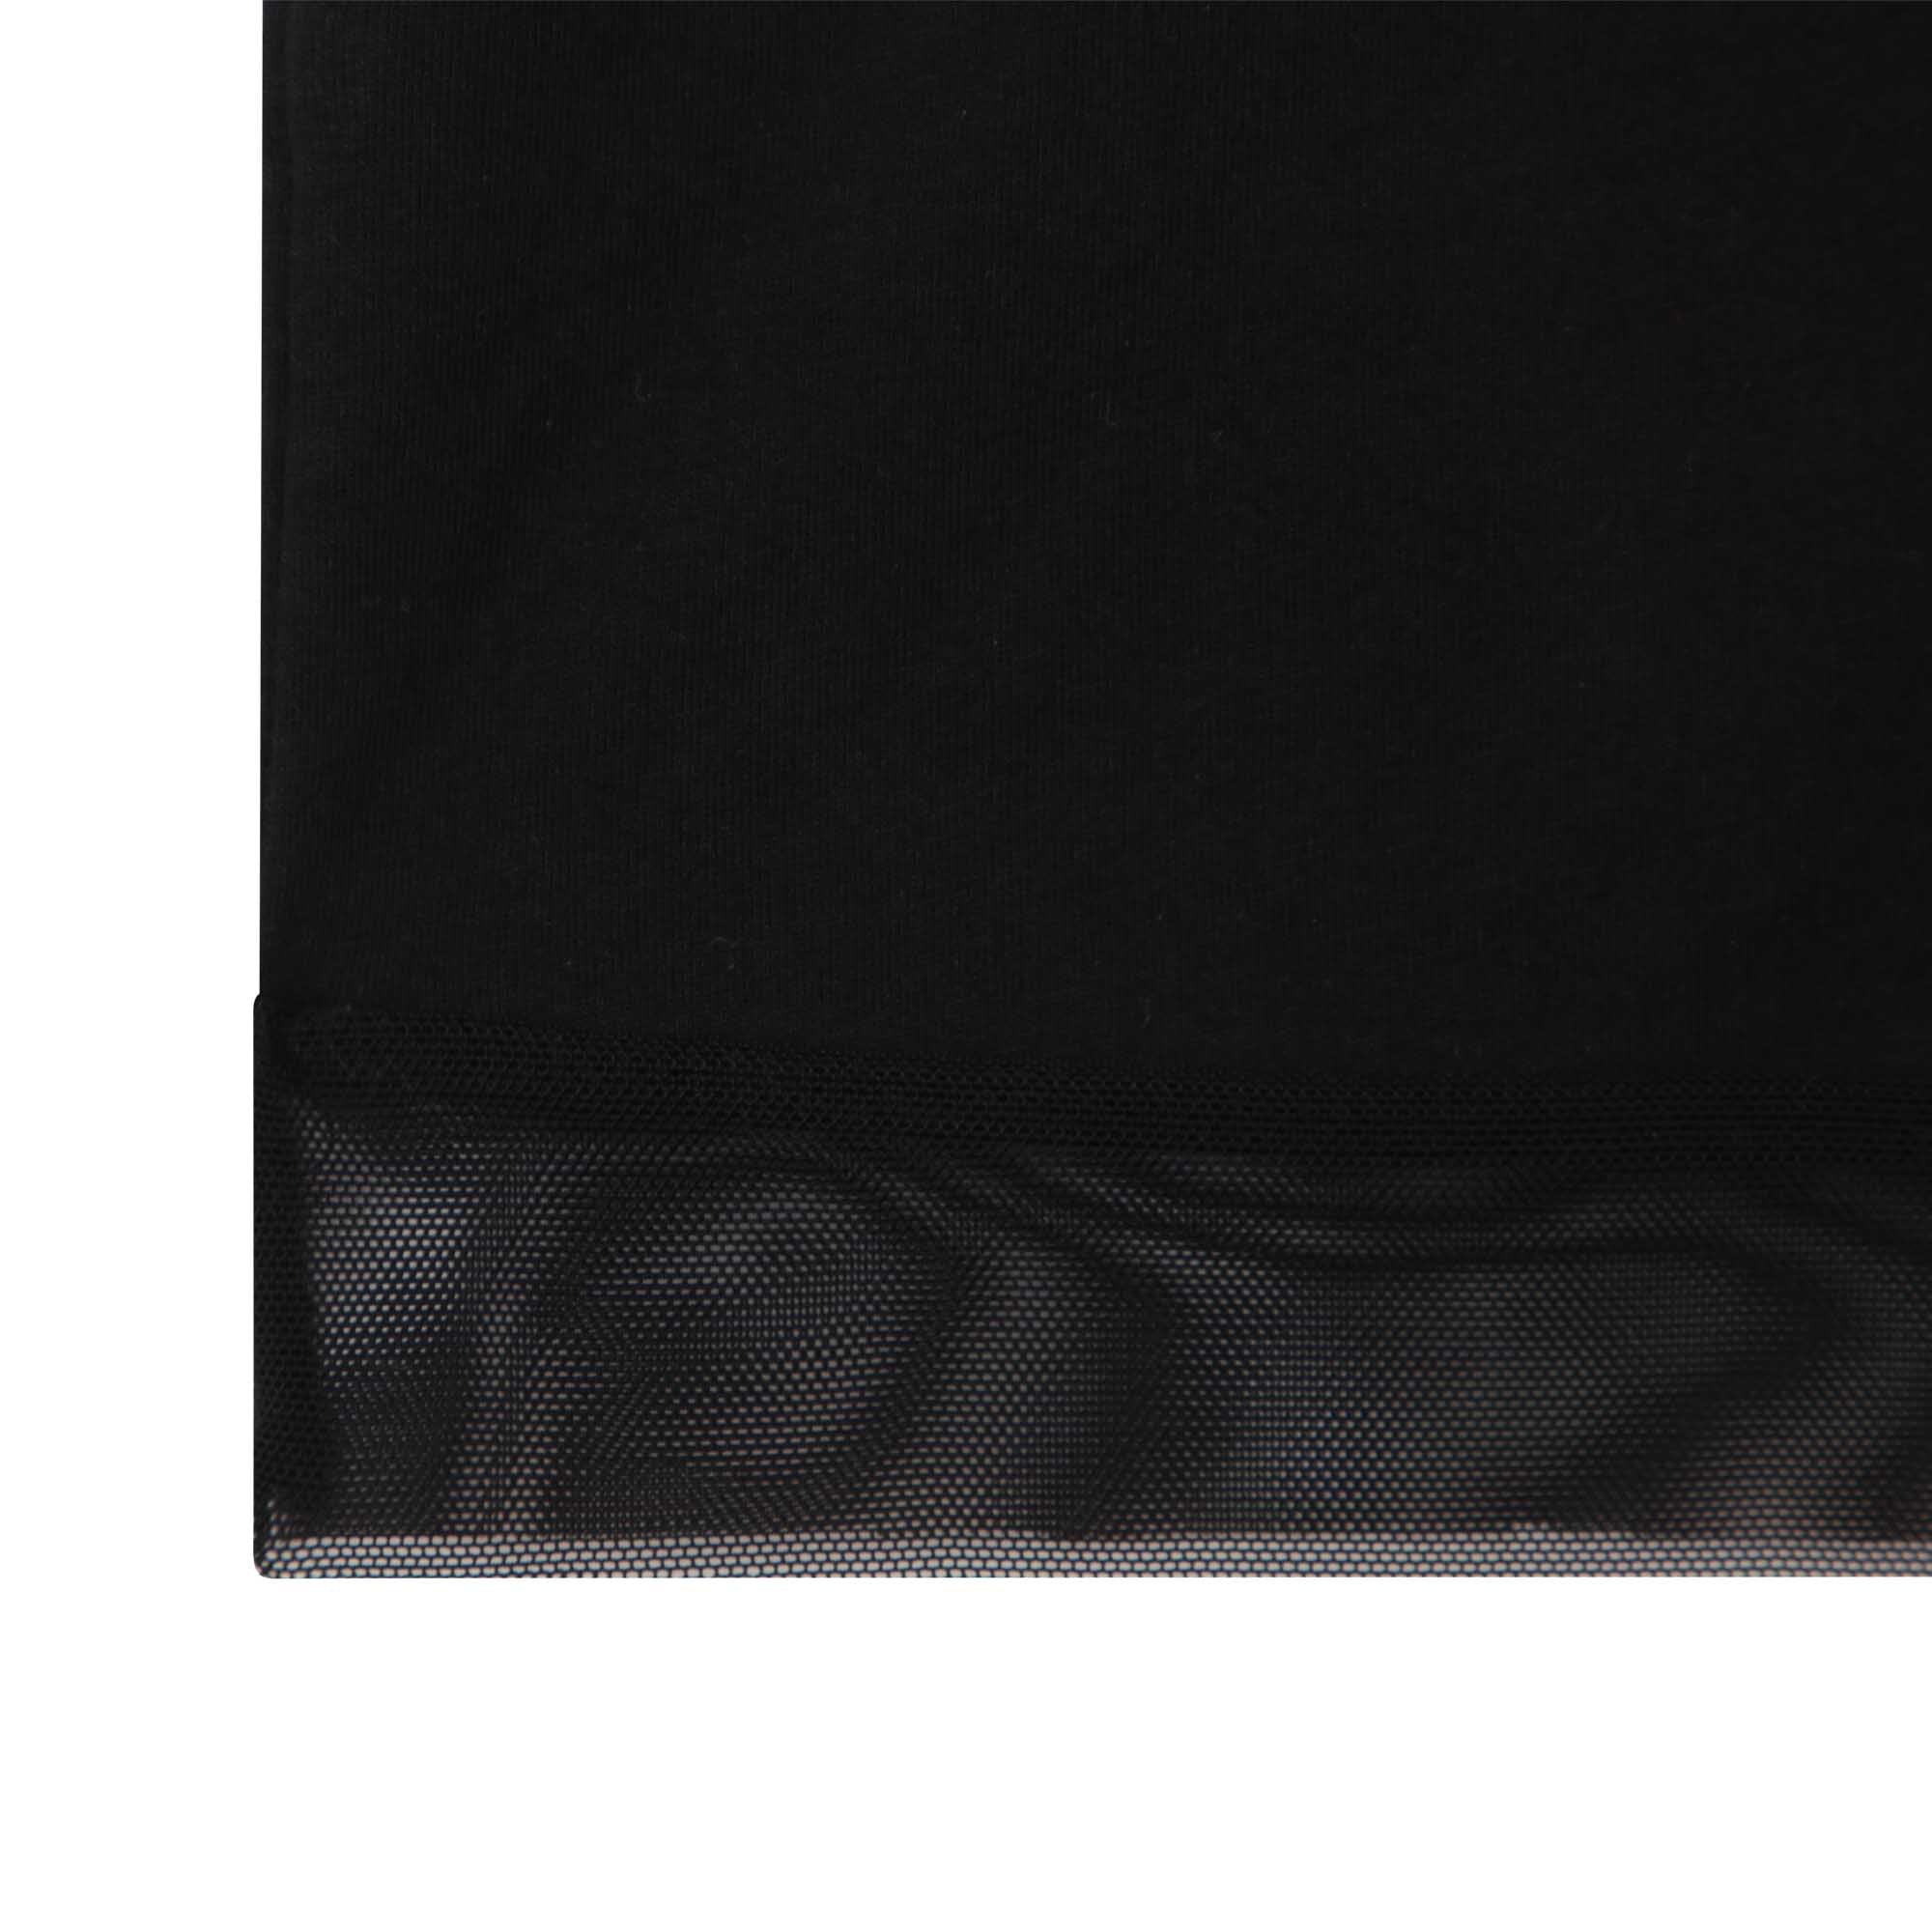 DKNY Short Sleeved Dress Style: D32873